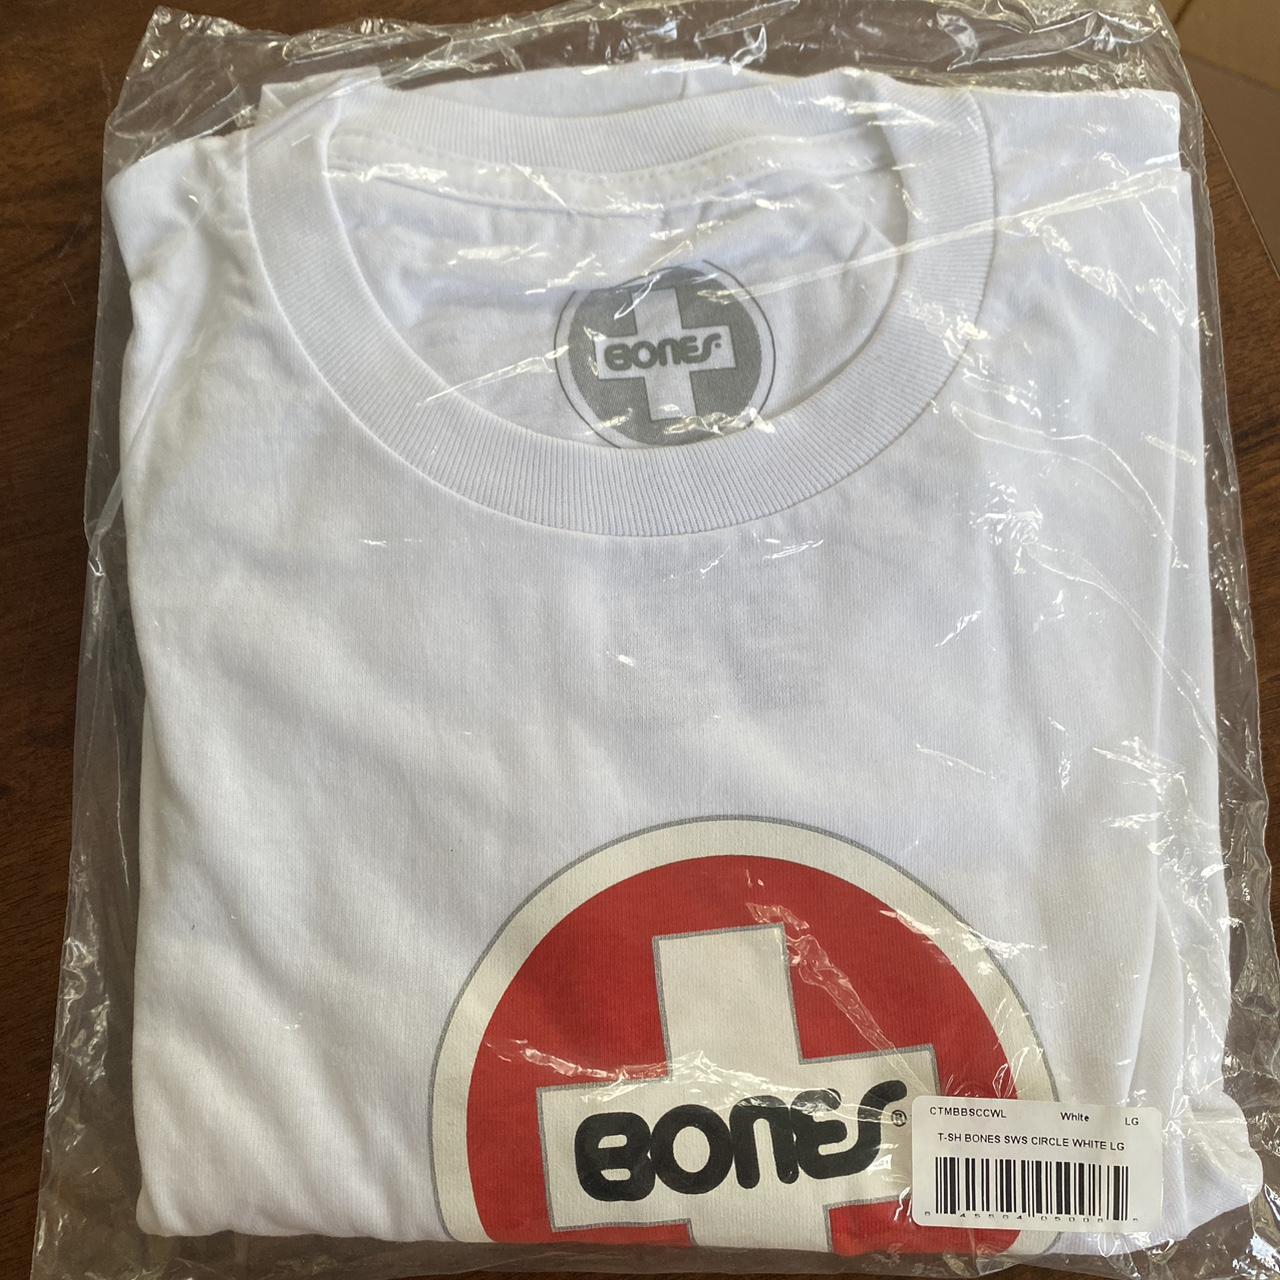 Bones Men's White and Red T-shirt (2)